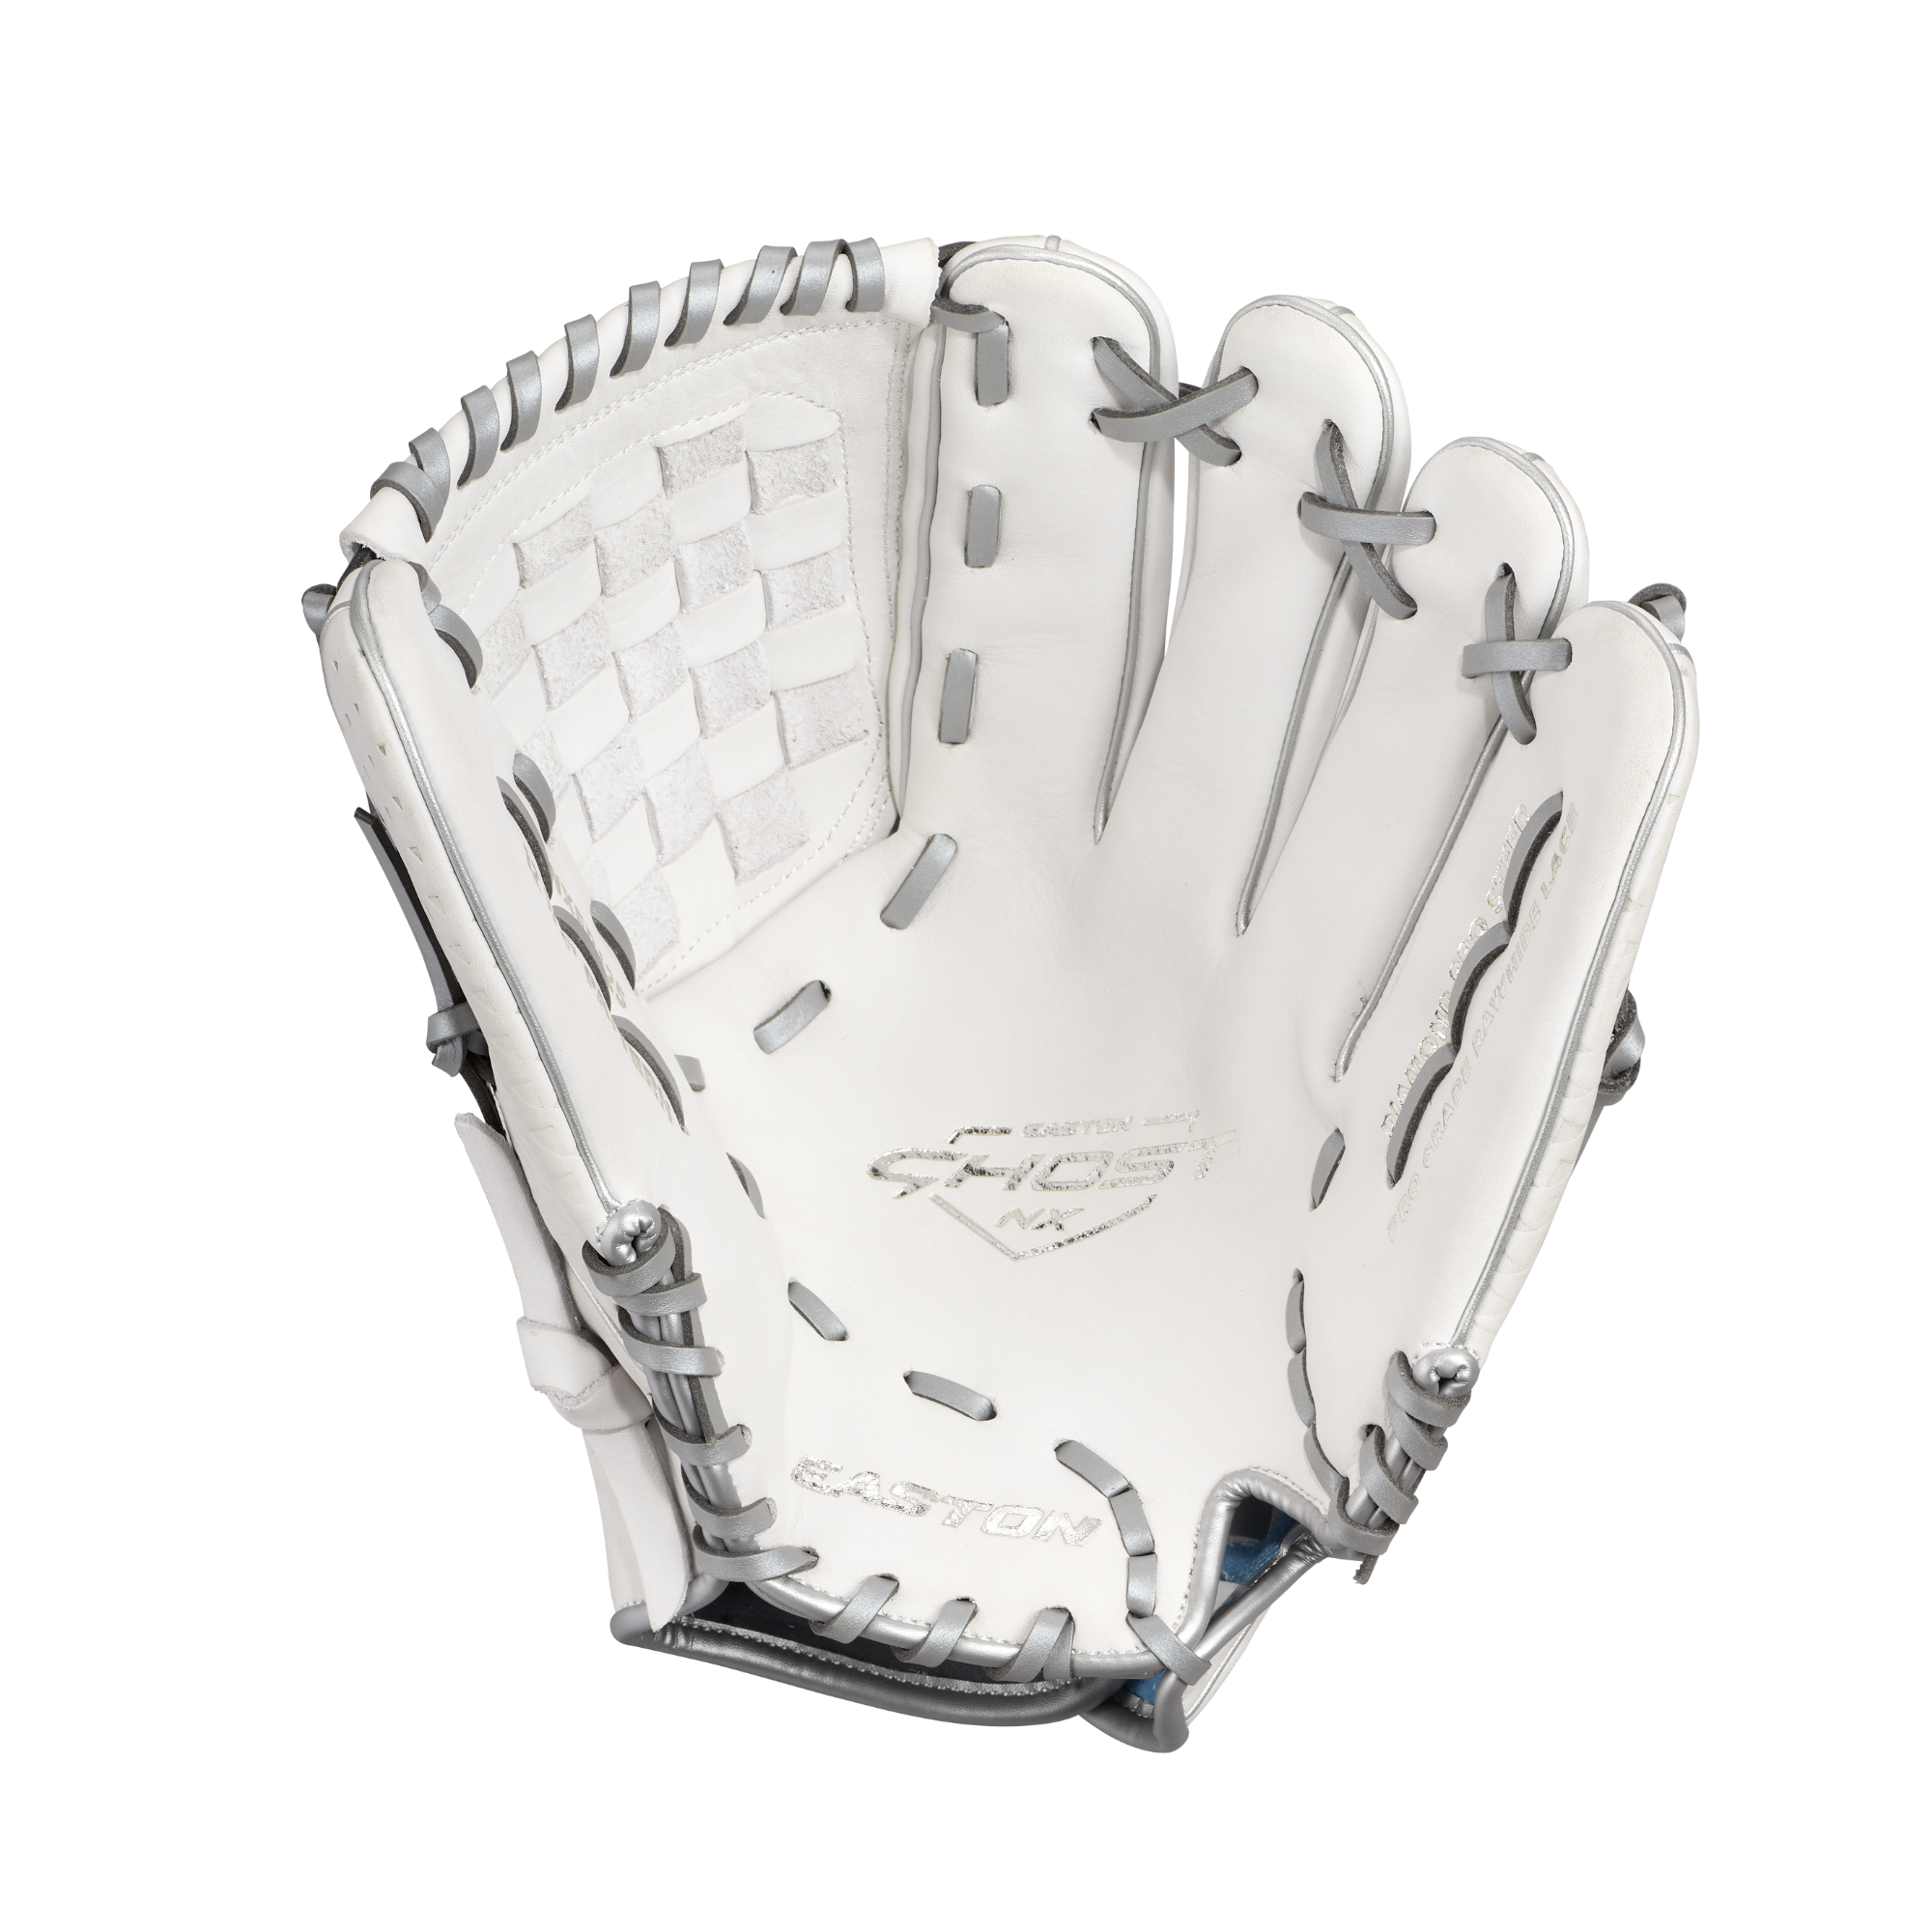 Easton Ghost NX FP Series Softball Gloves 12.5-inch (IF)  RHT